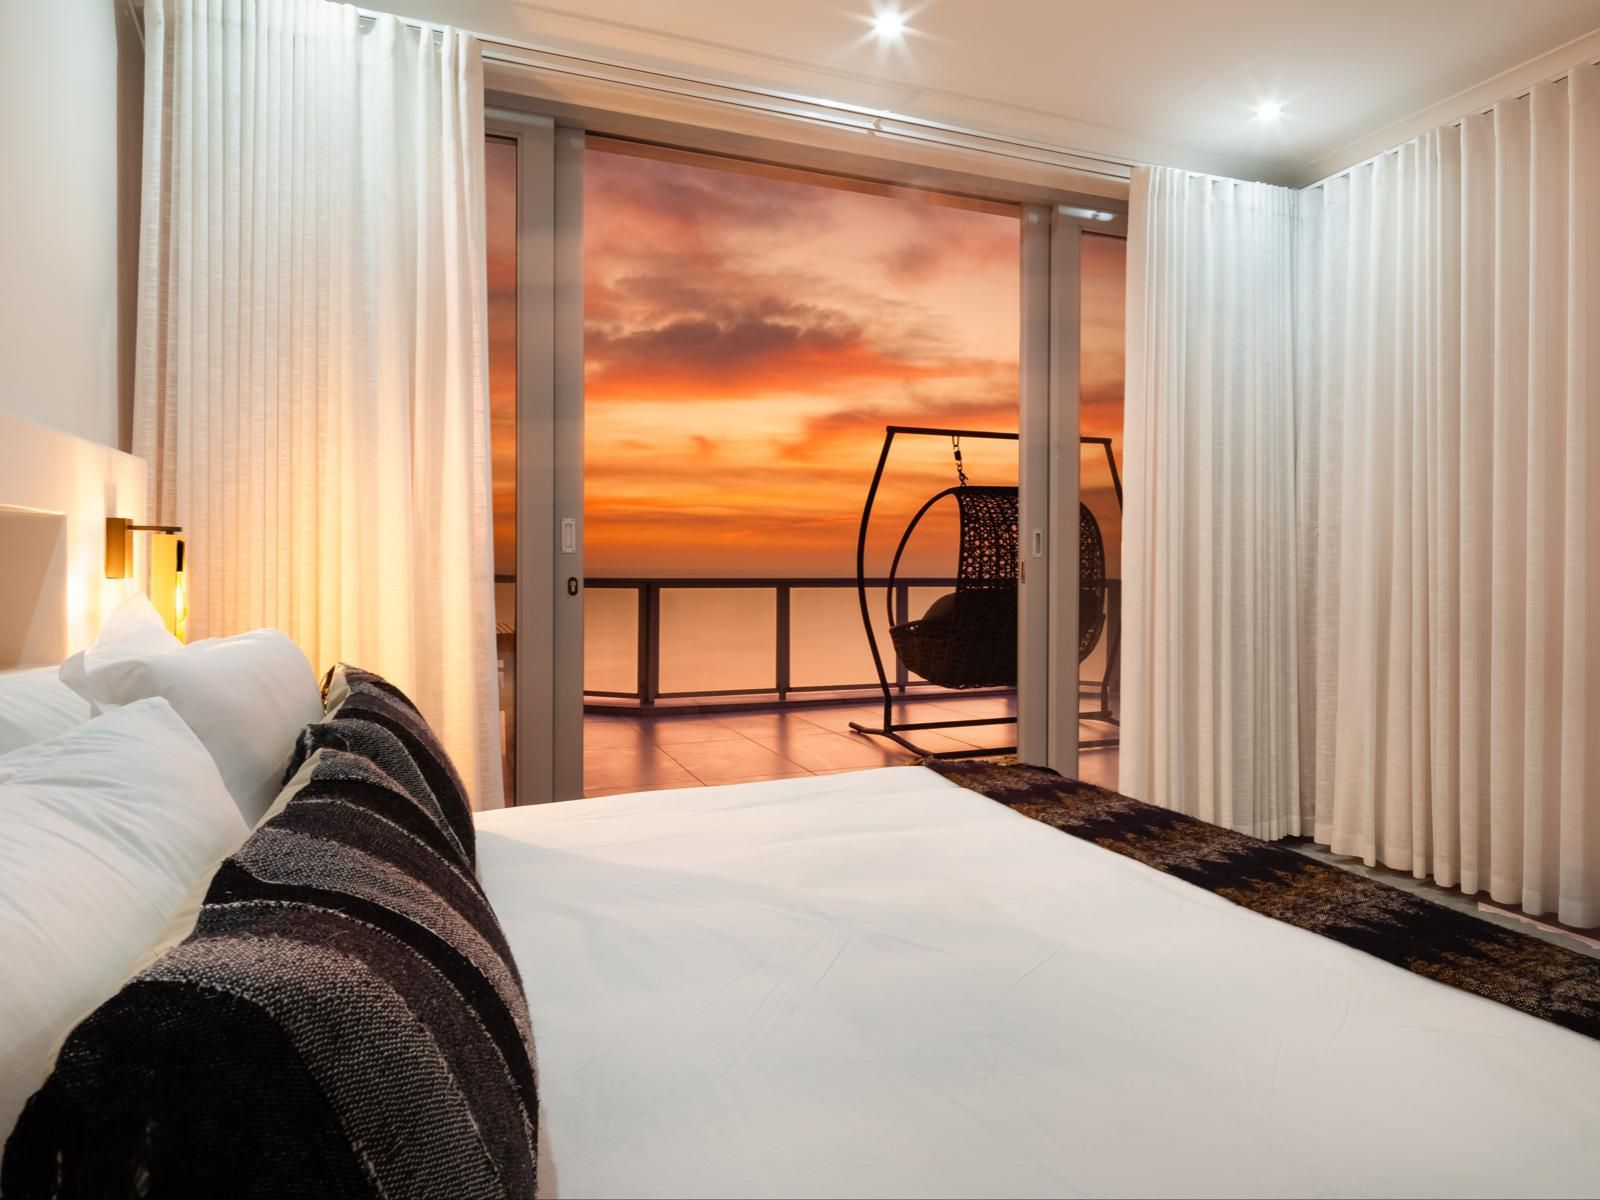 Zimanga Beachfront Penthouse Ballito Kwazulu Natal South Africa Bedroom, Sunset, Nature, Sky